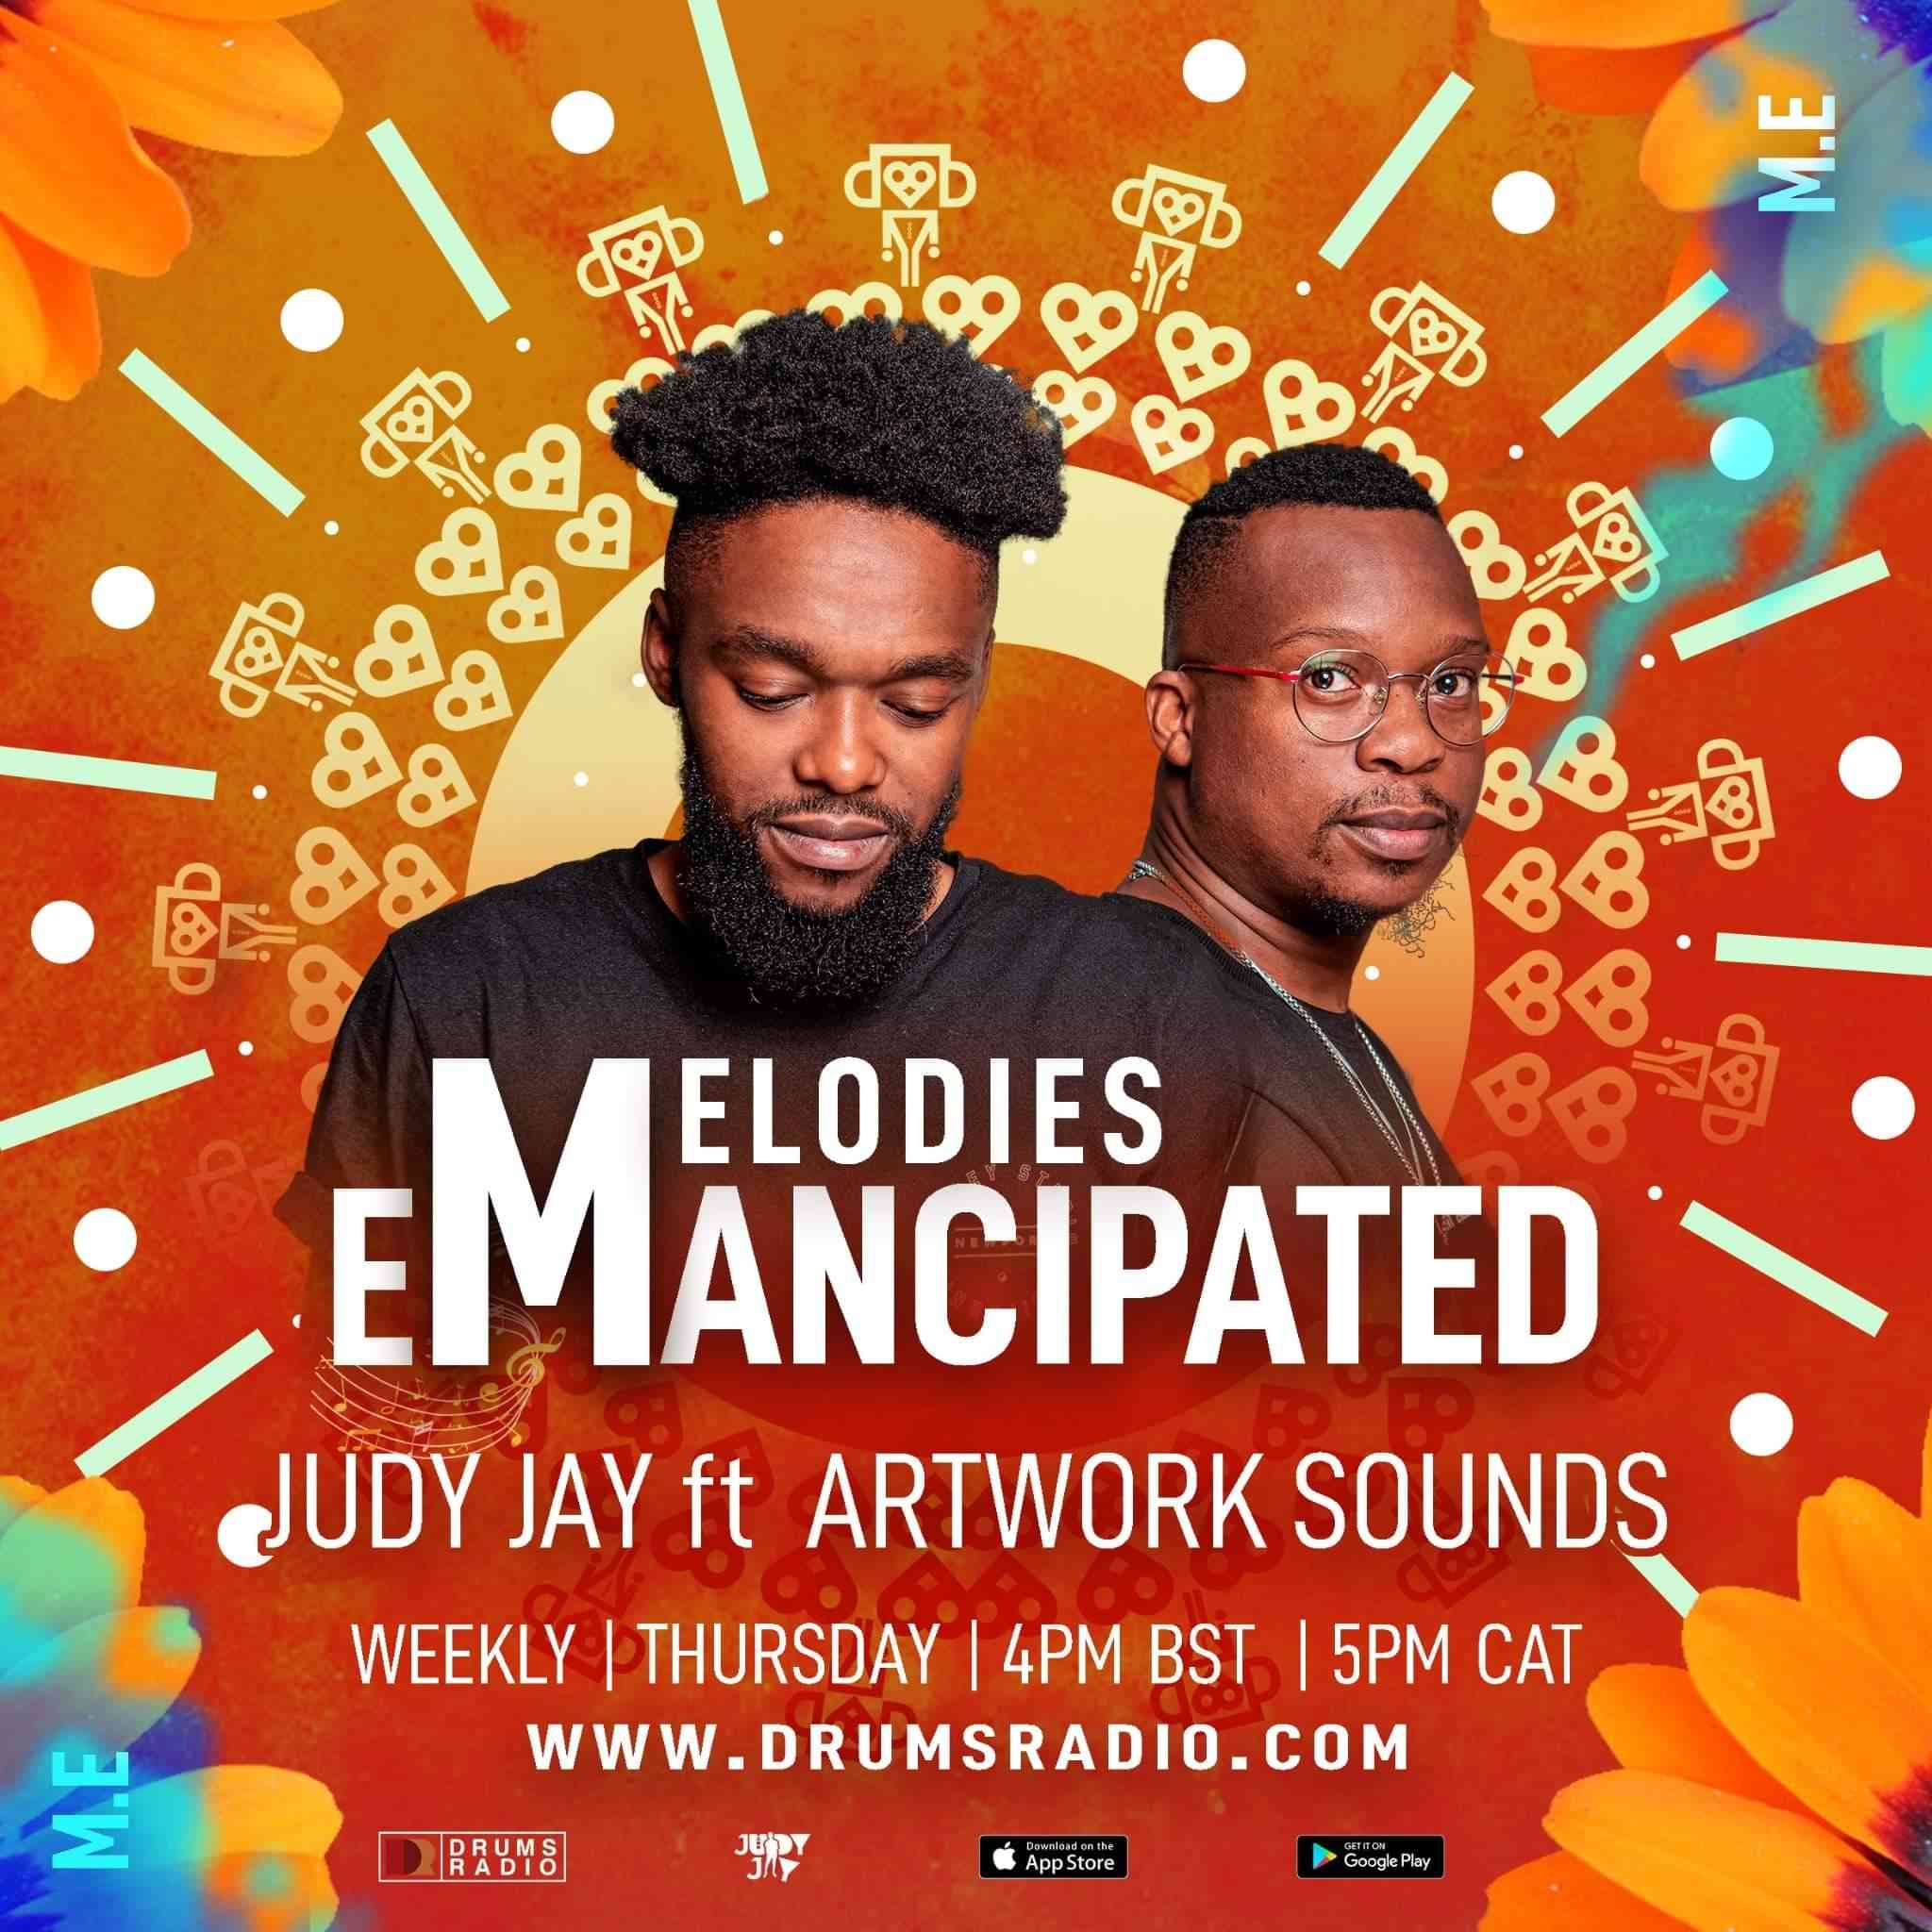 Artwork Sounds & Judy Jay Melodies Emancipated Mix